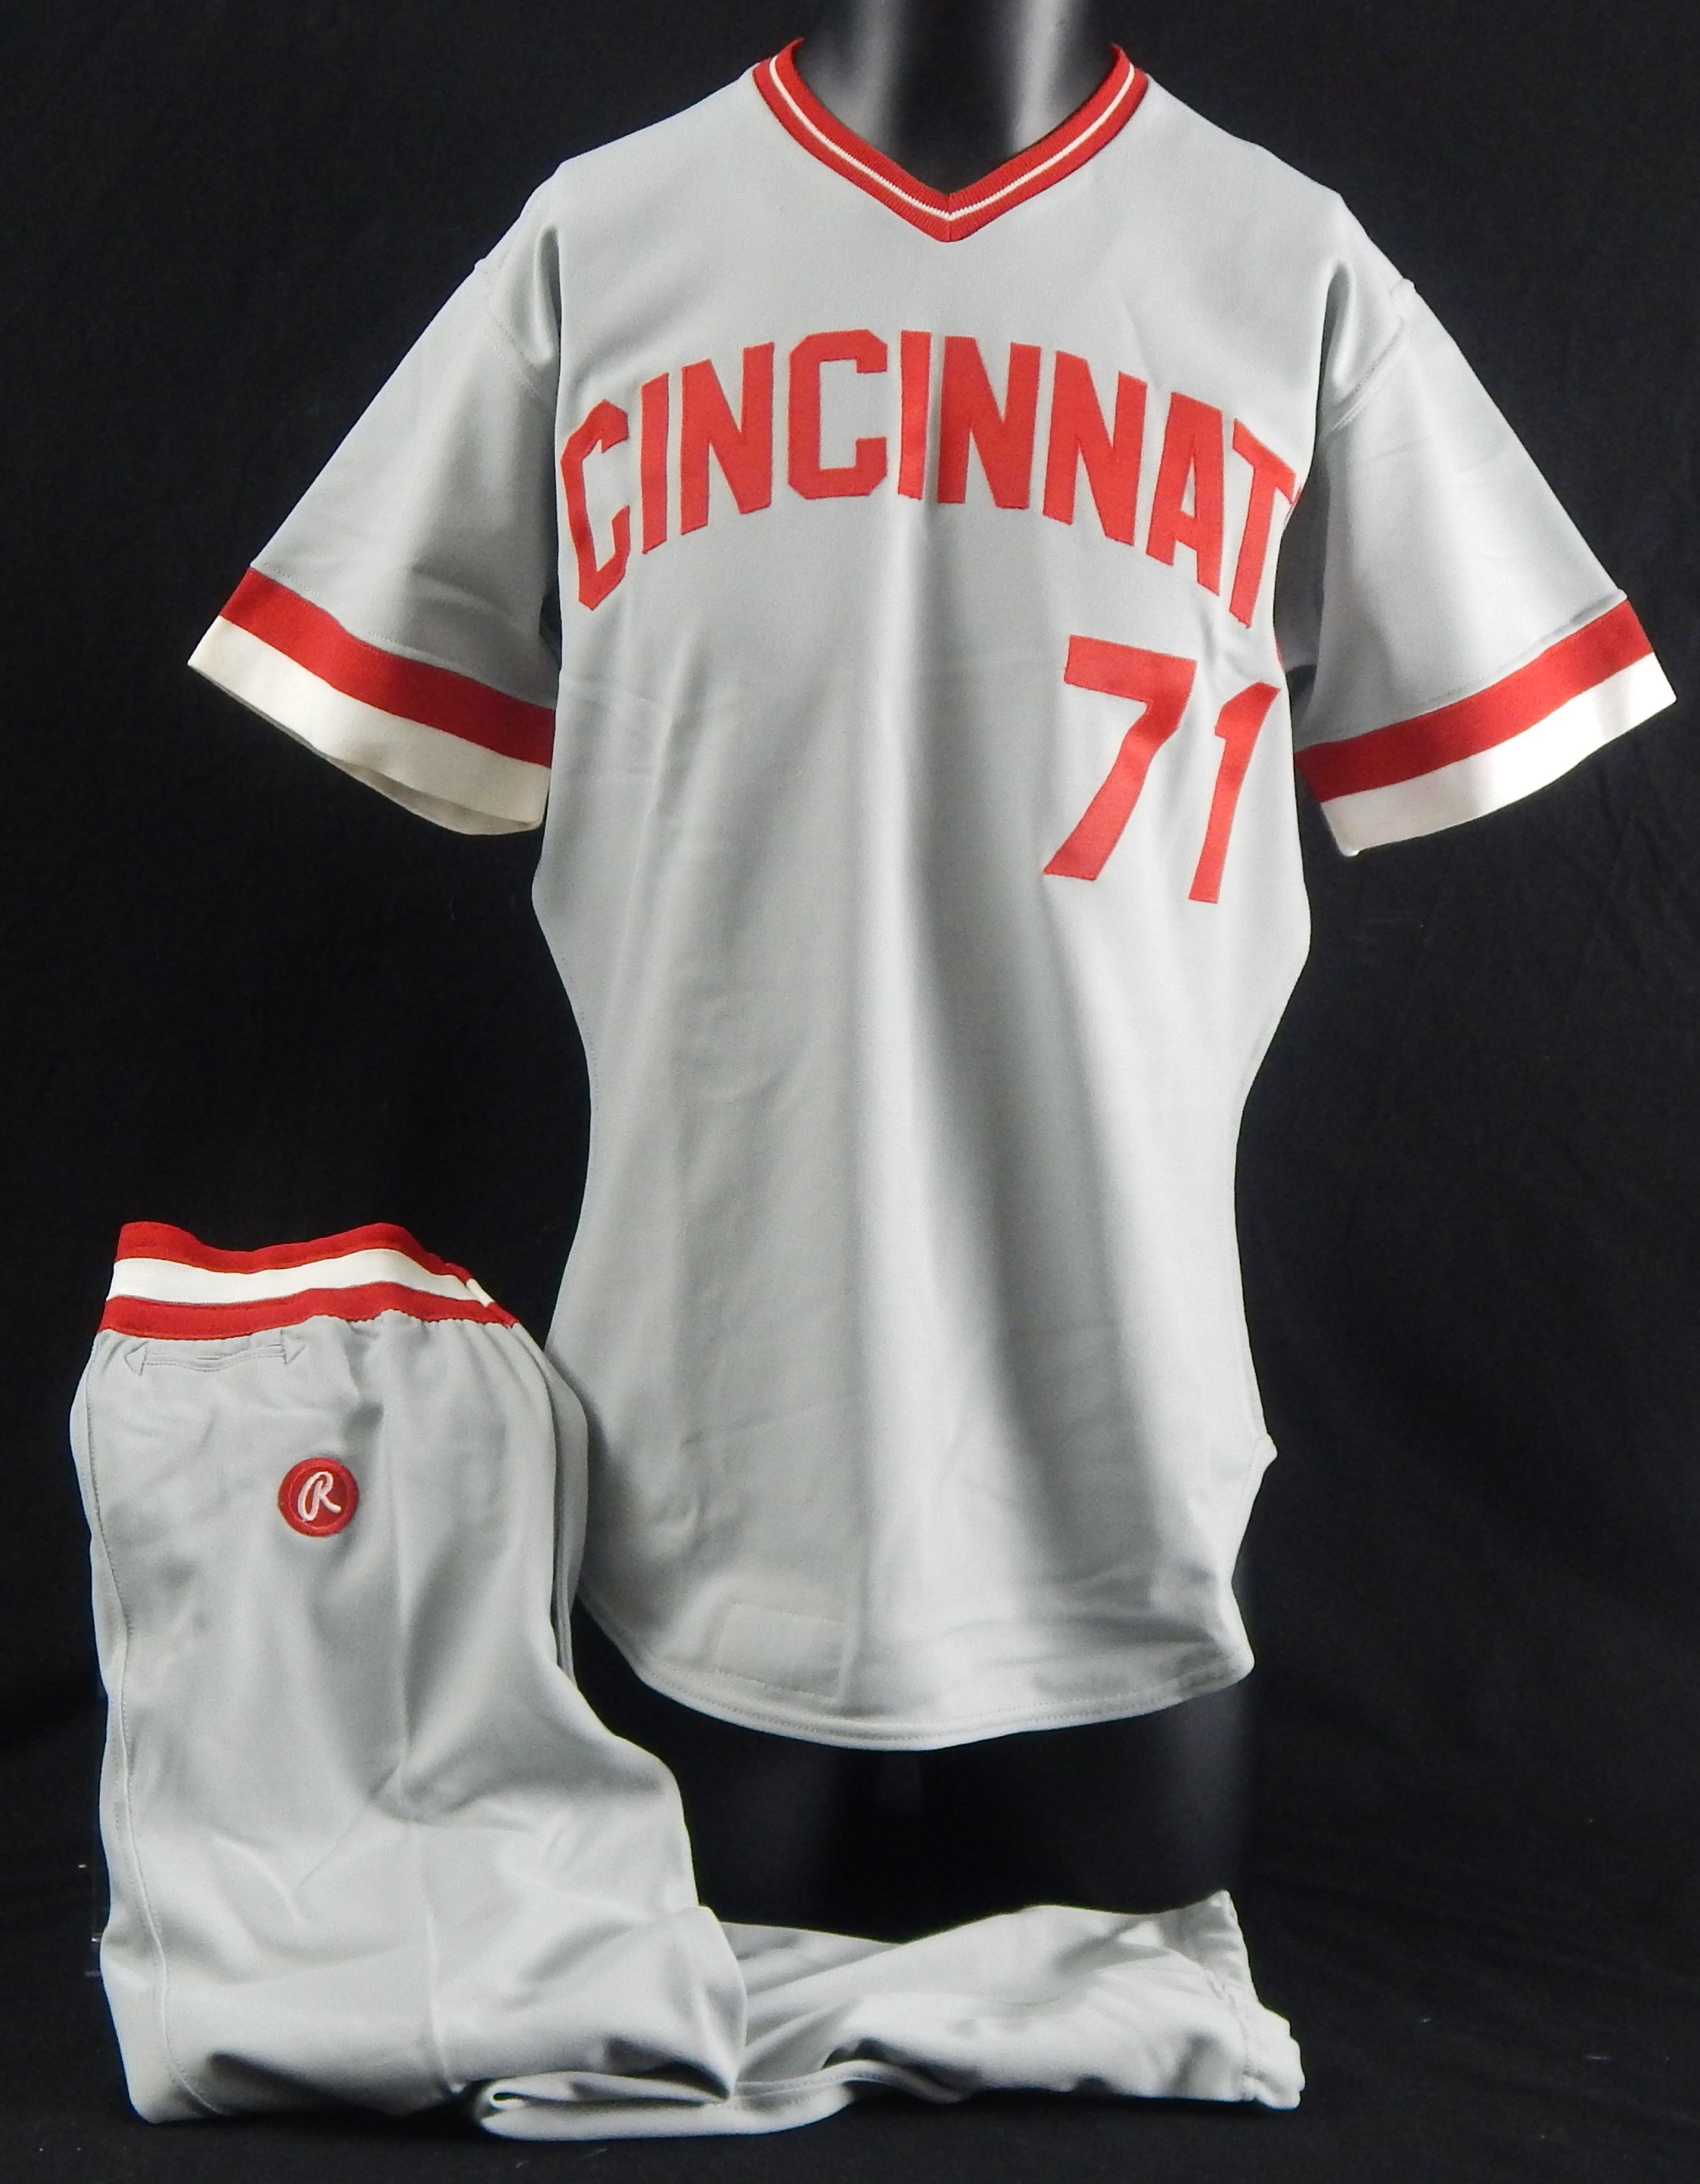 - 1978 Tour of Japan Cincinnati Reds Uniform. From the Bernie Stowe Collection